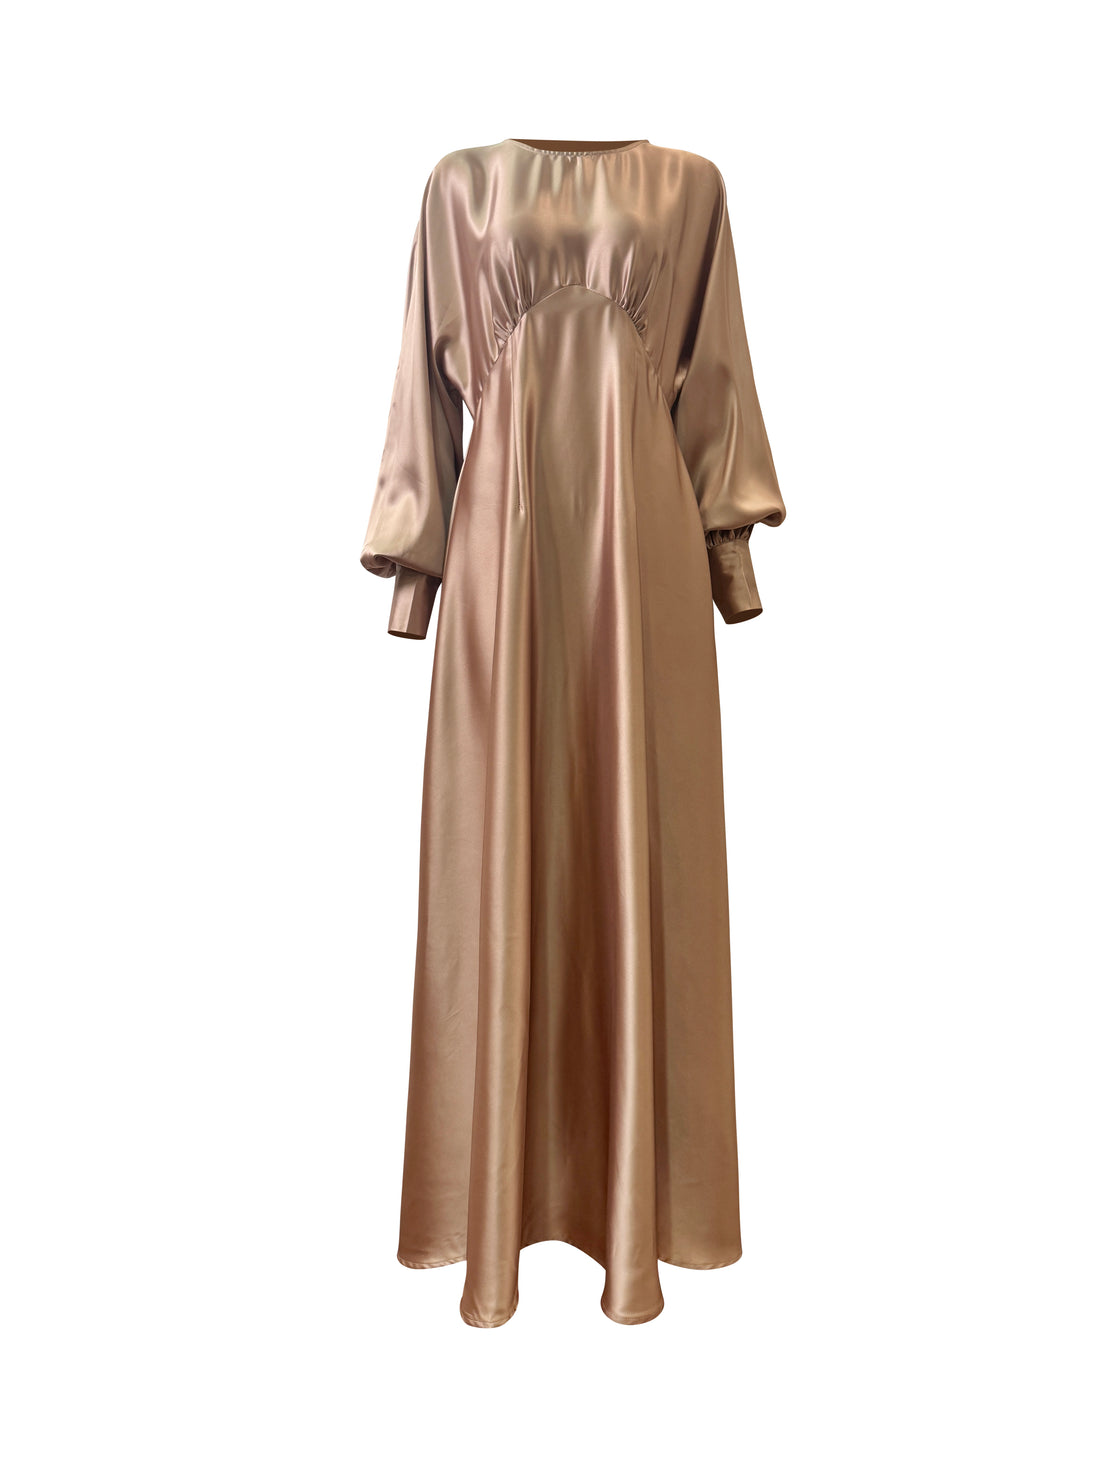 Imelda Batwing Dress - Soft Gold